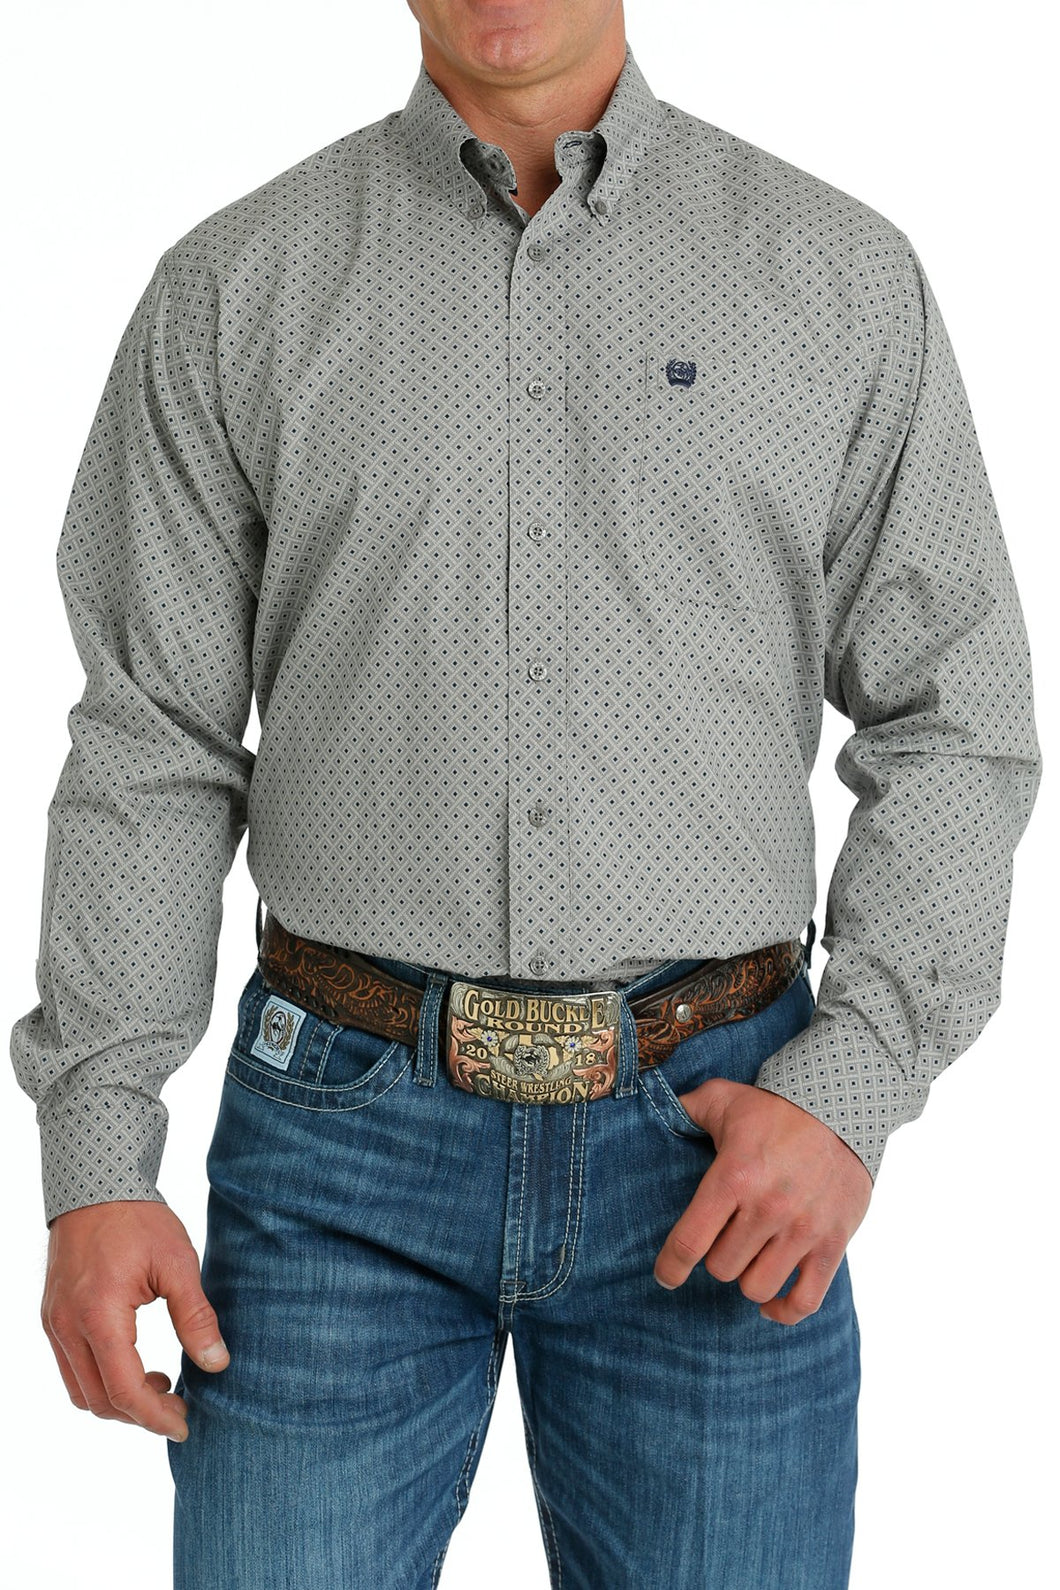 Pard's Western Shop Cinch Men's Gray/White/Navy Diamond Print Button-Down Shirt